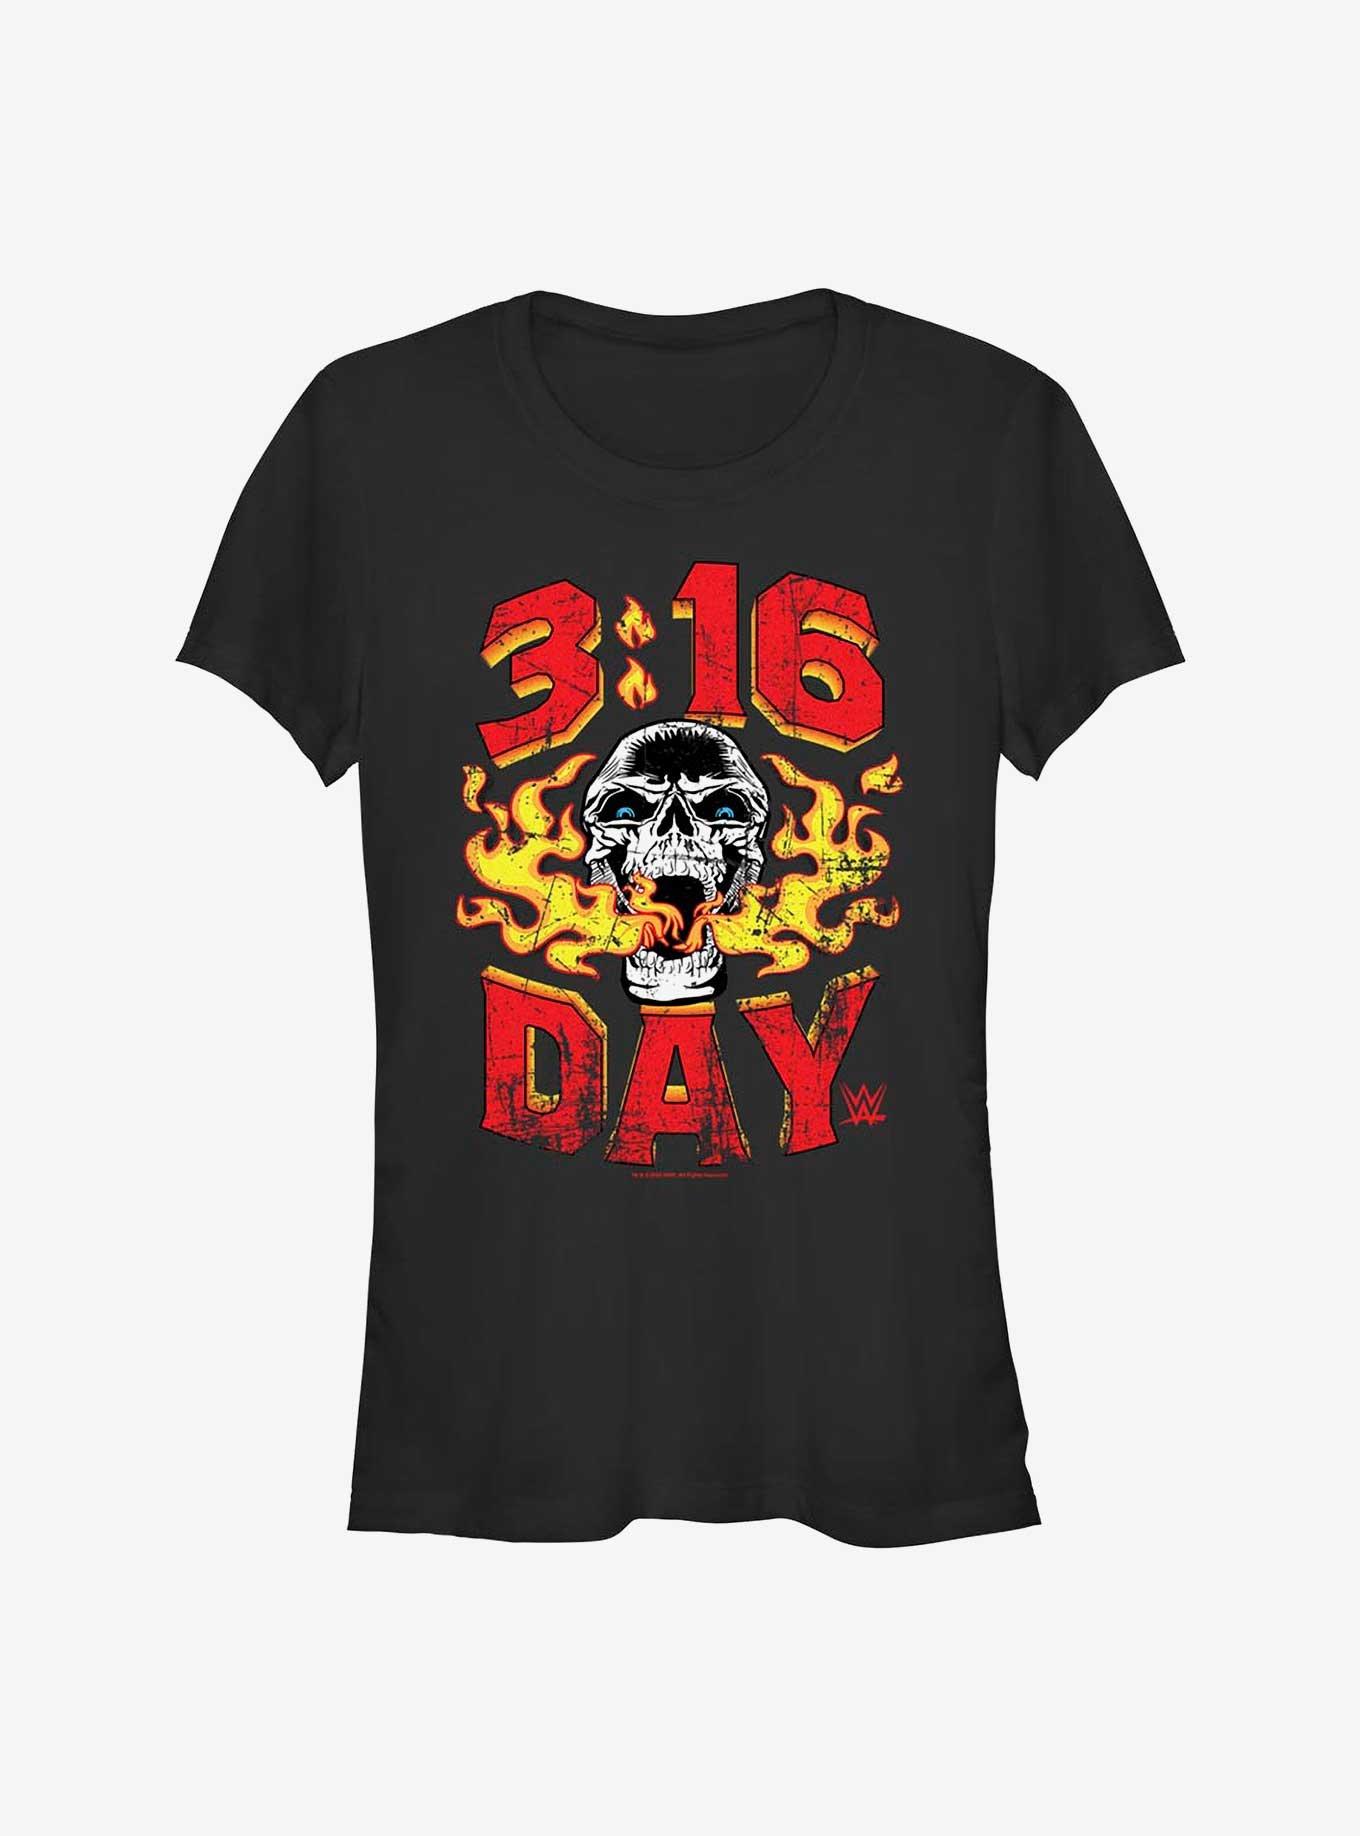 WWE 3:16 Day Stone Cold Steve Austin Girls T-Shirt